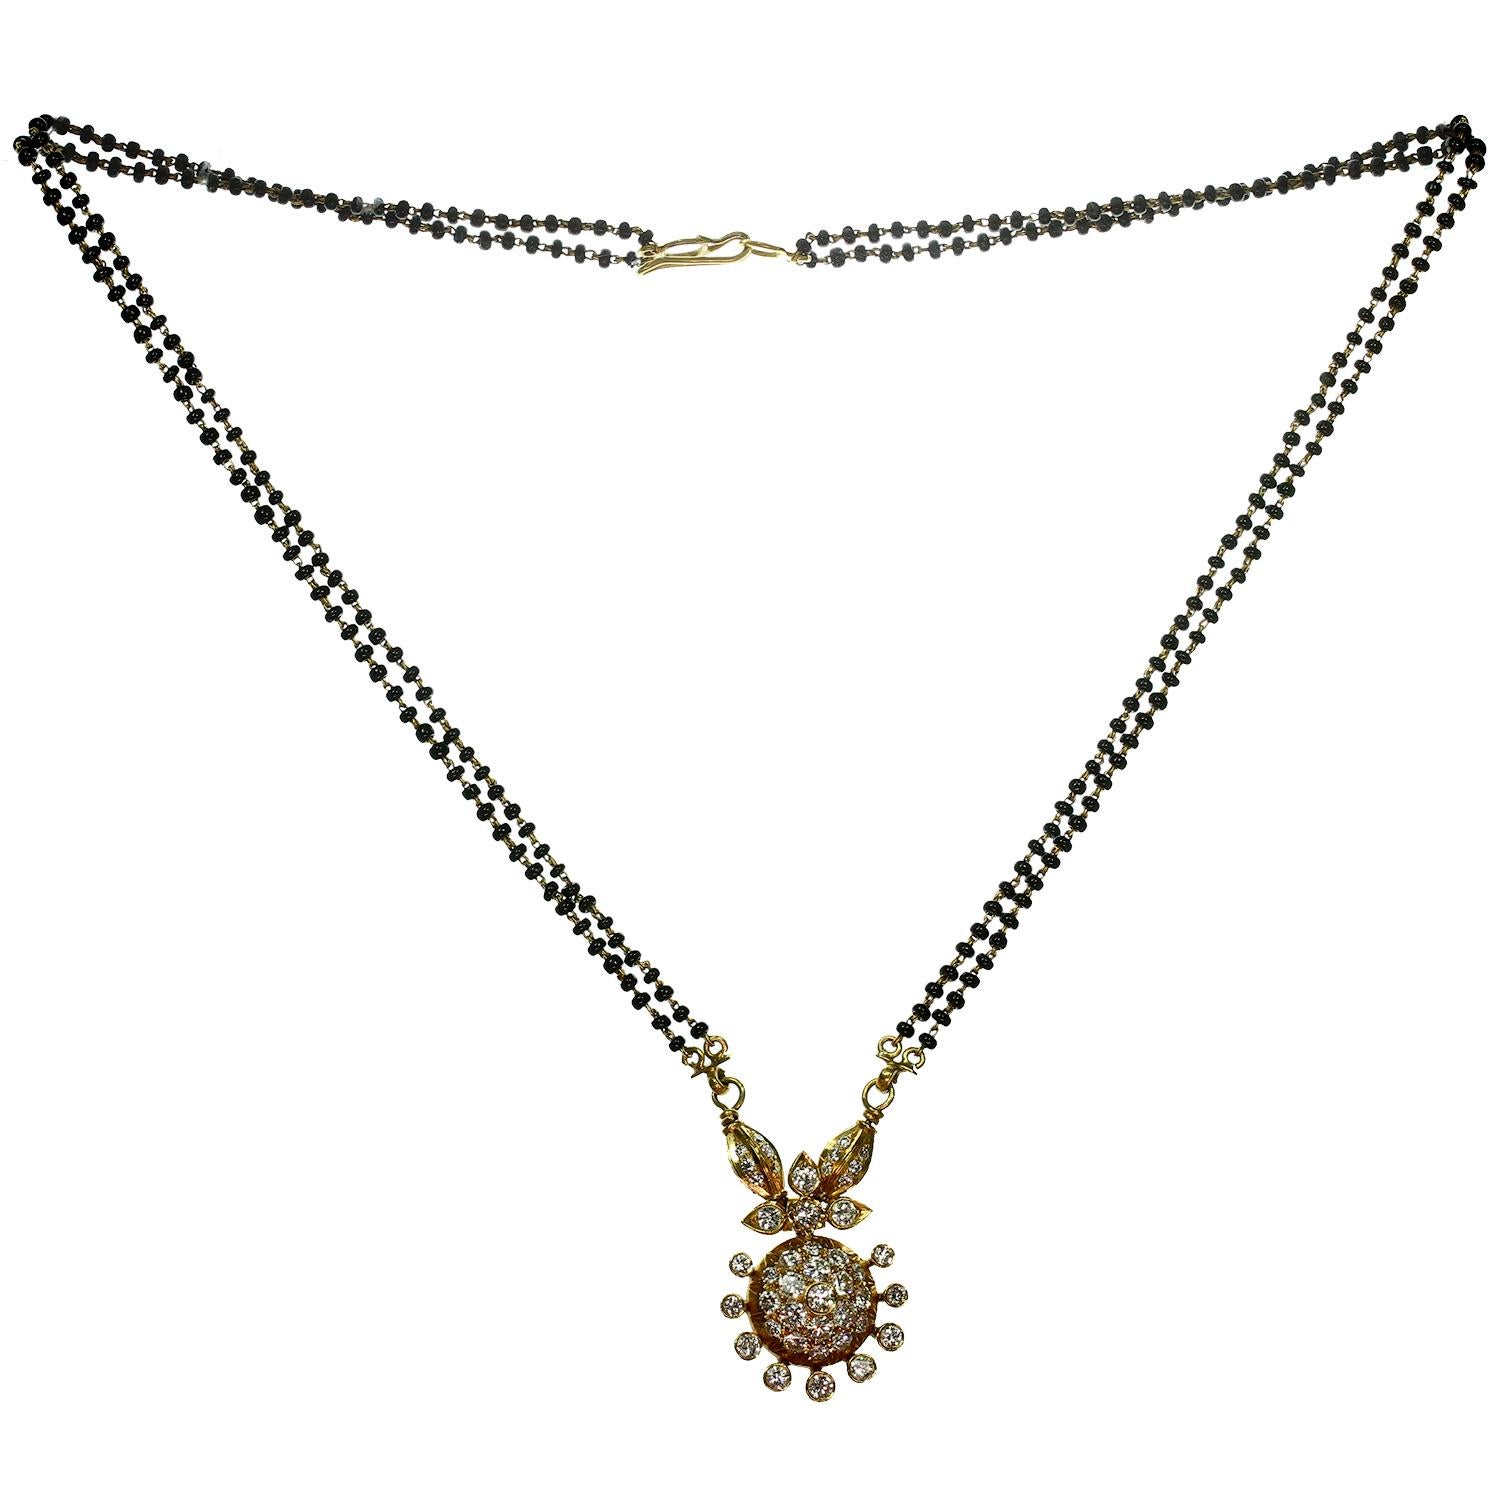 22 k gold choker necklace fine handmade jewelry mangalsutra wedding necklace